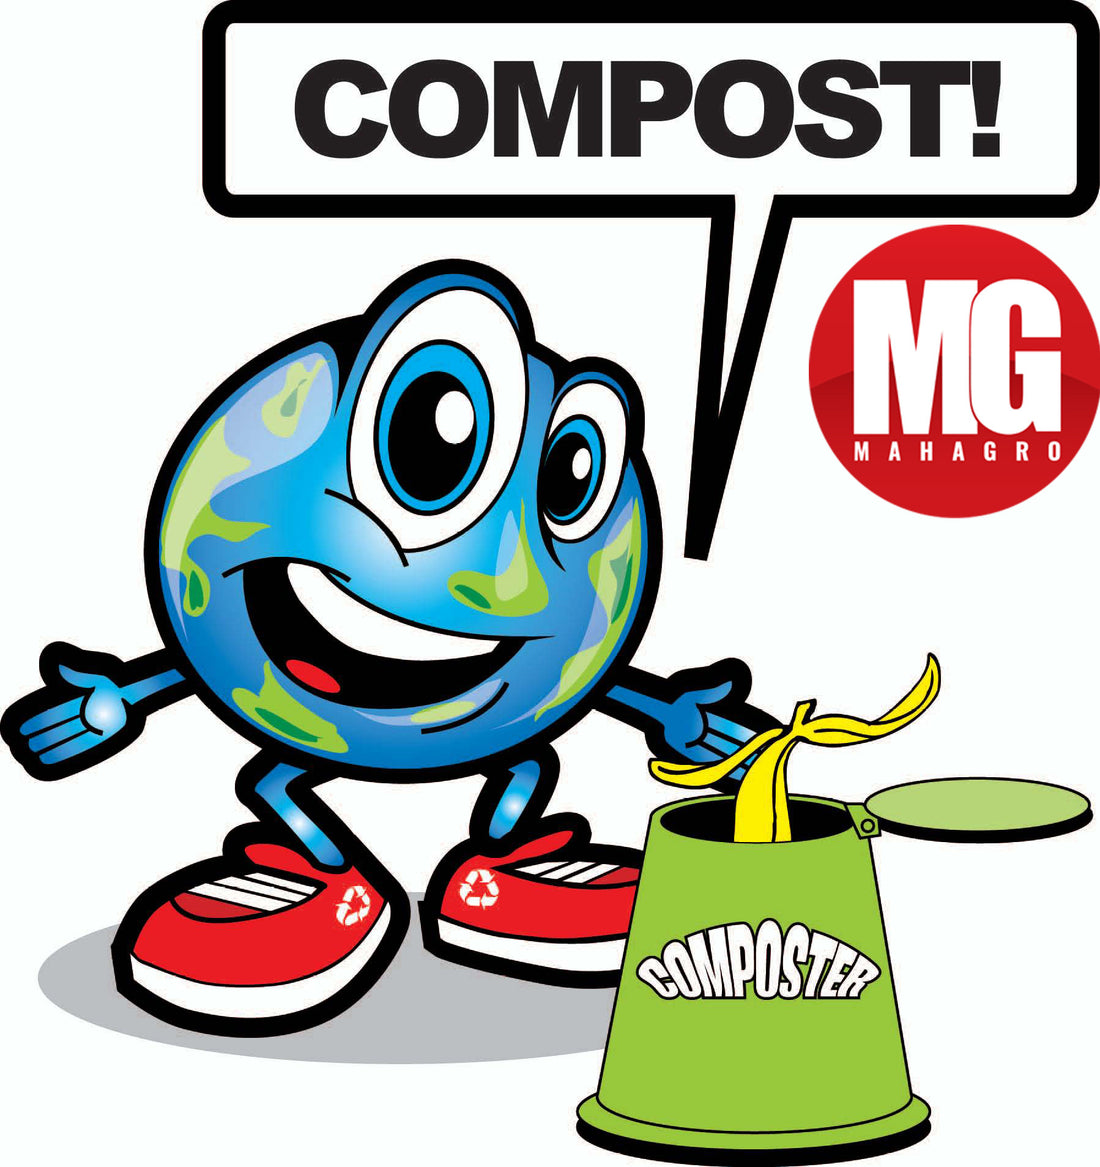 Managing Kitchen Waste : Composting at Home